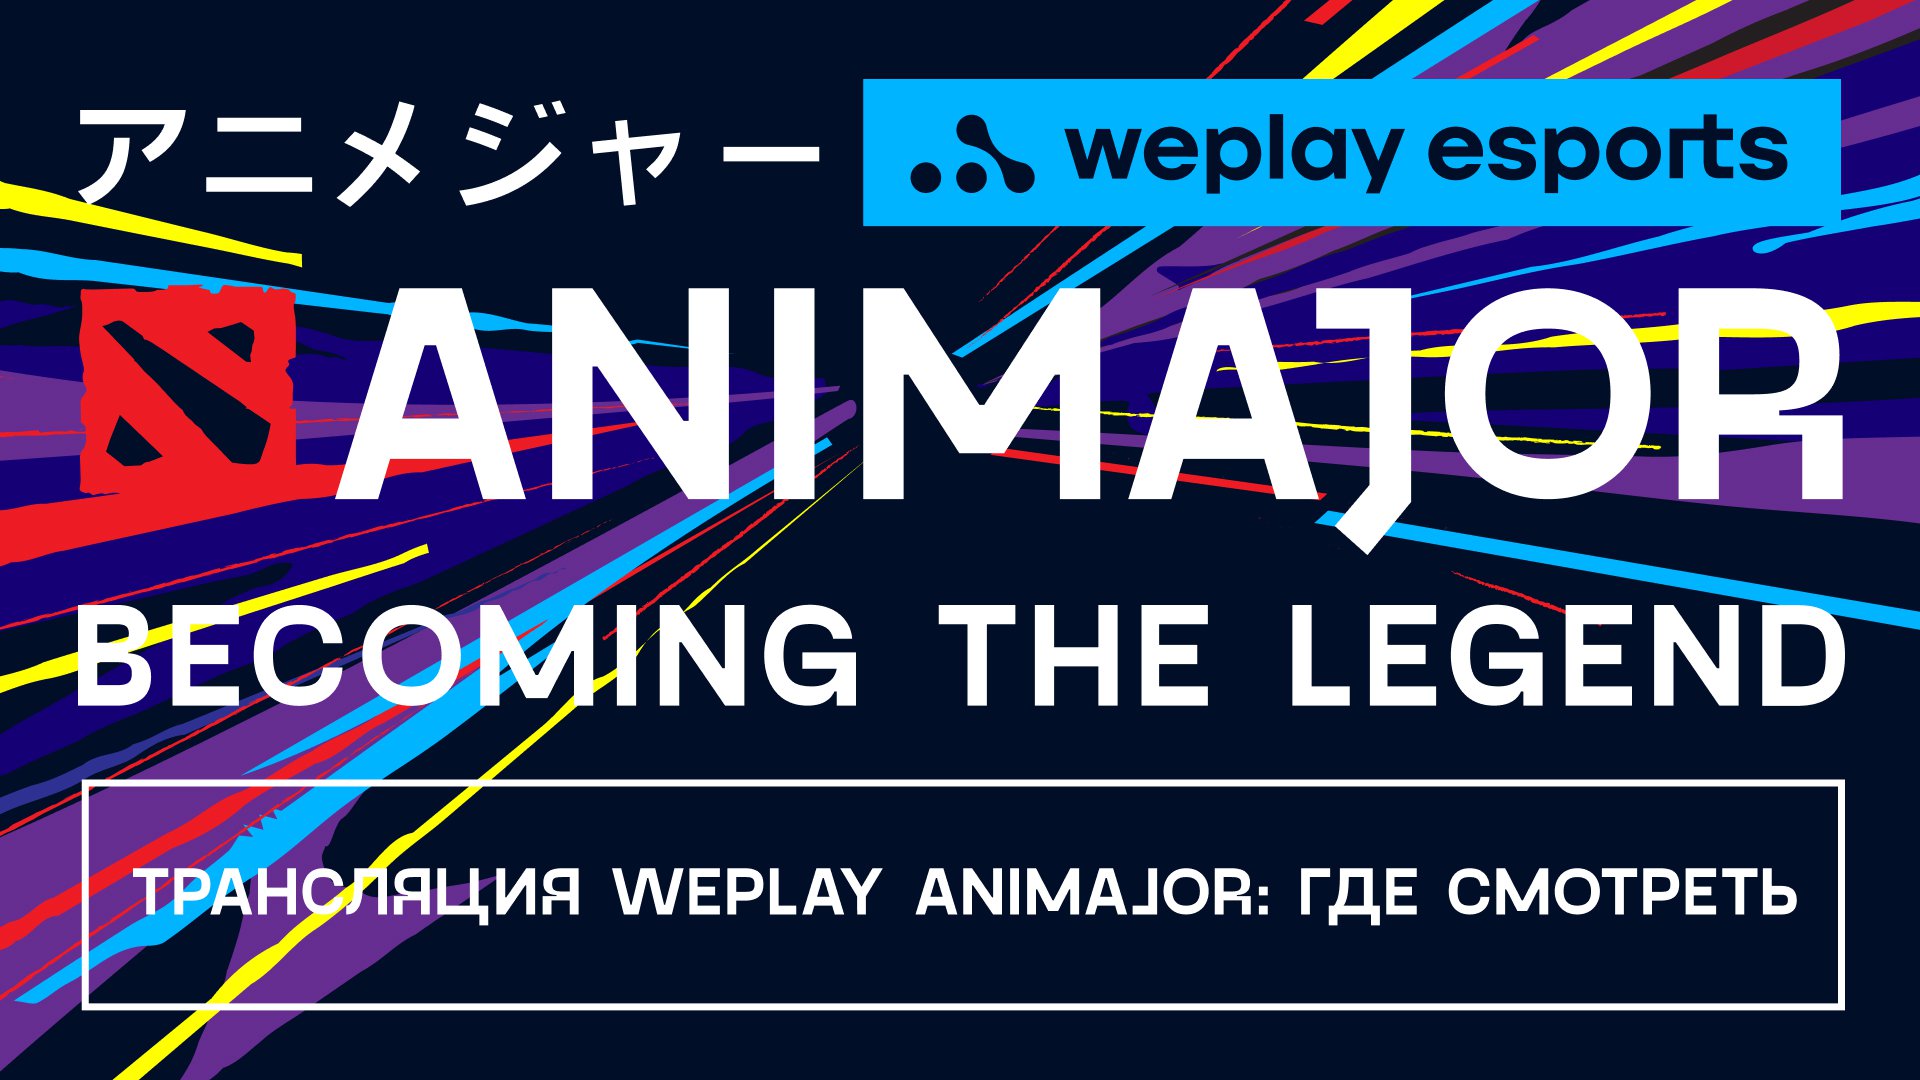 Трансляция WePlay AniMajor. Изображение: WePlay Esports